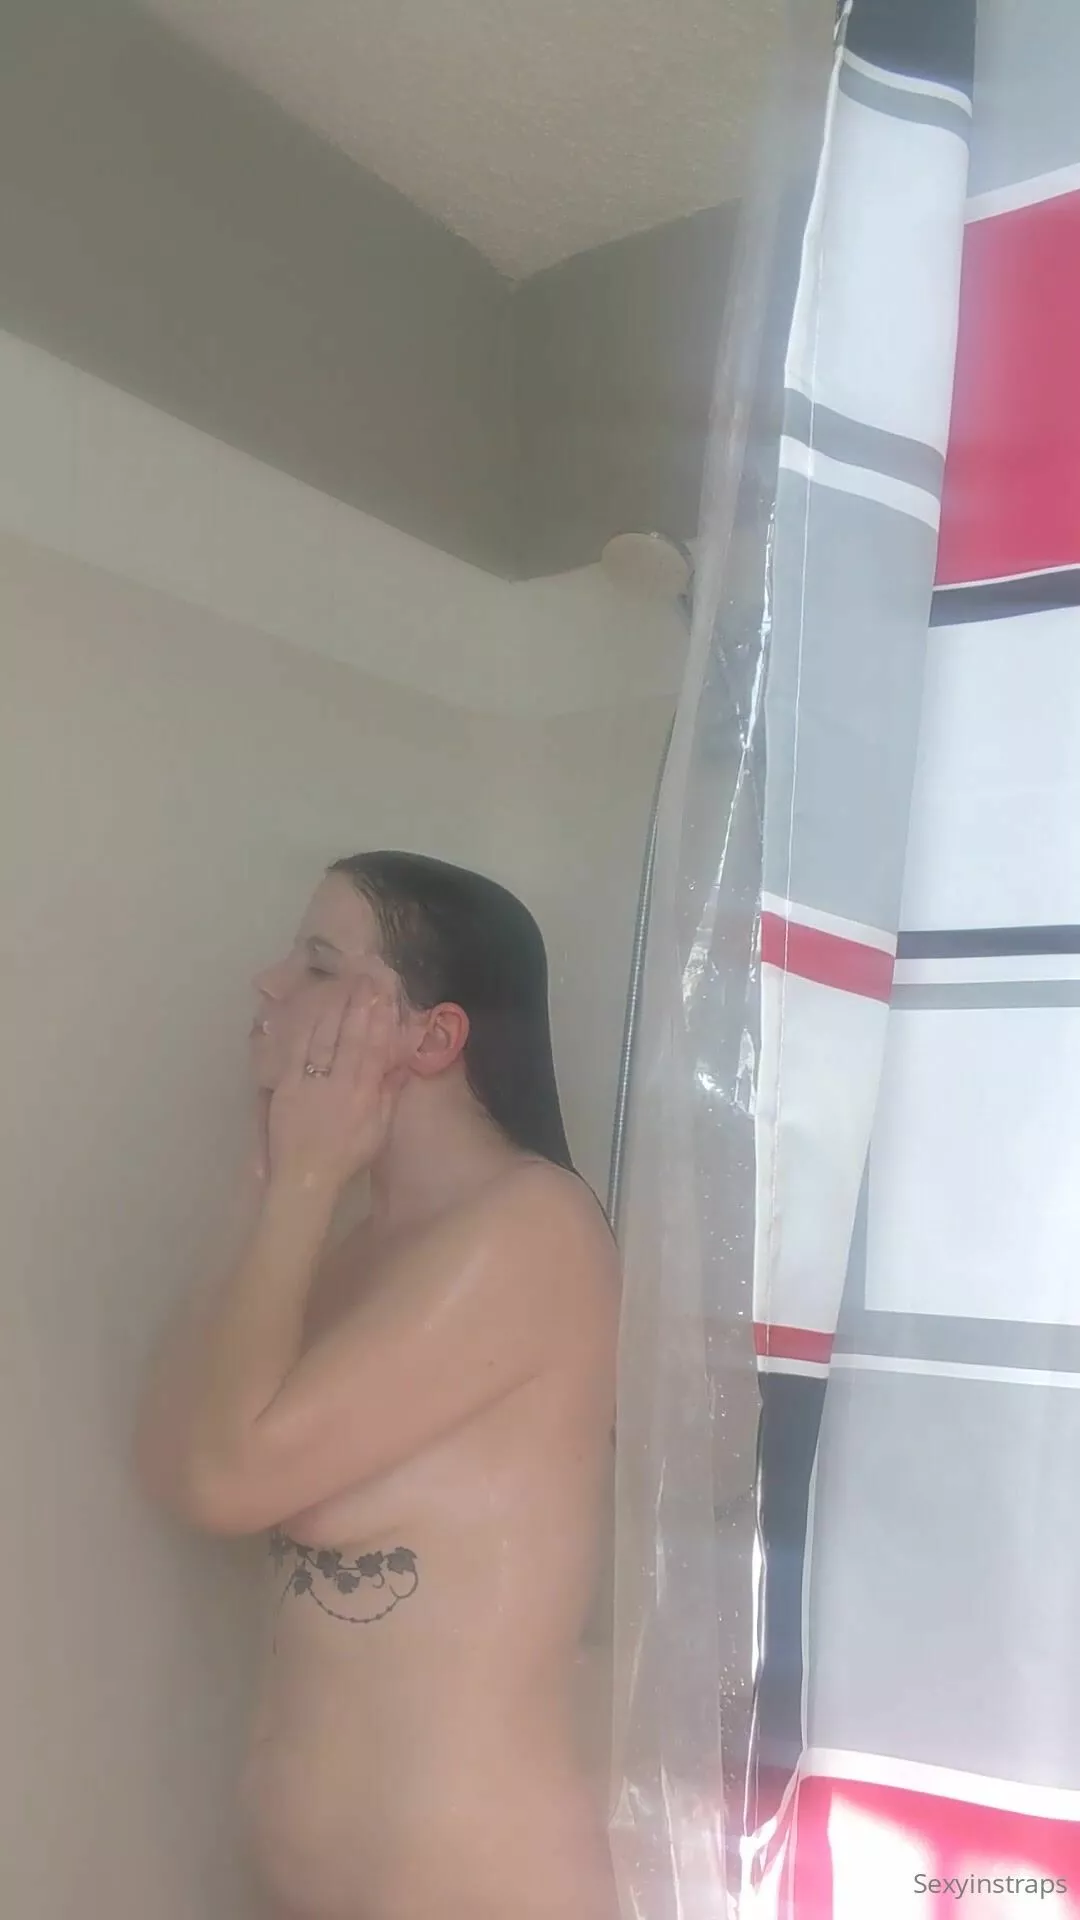 Sexyinstraps come watch me shower peeping tom voyeur style xxx onlyfans porn  videos - Pornflix